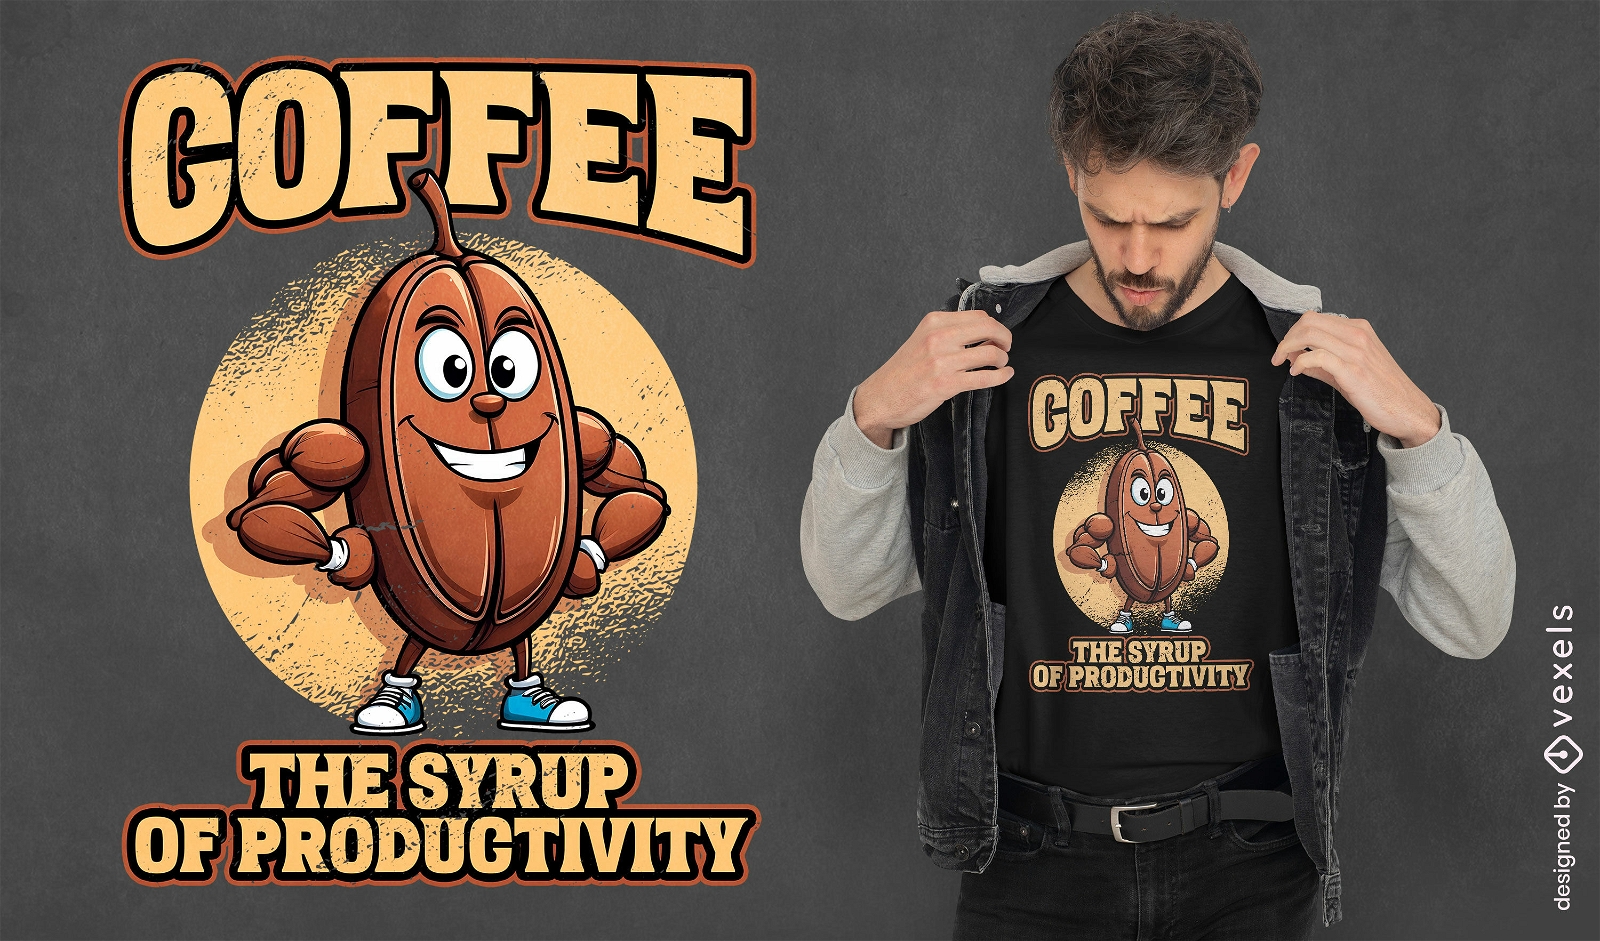 Coffee bean character t-shirt design